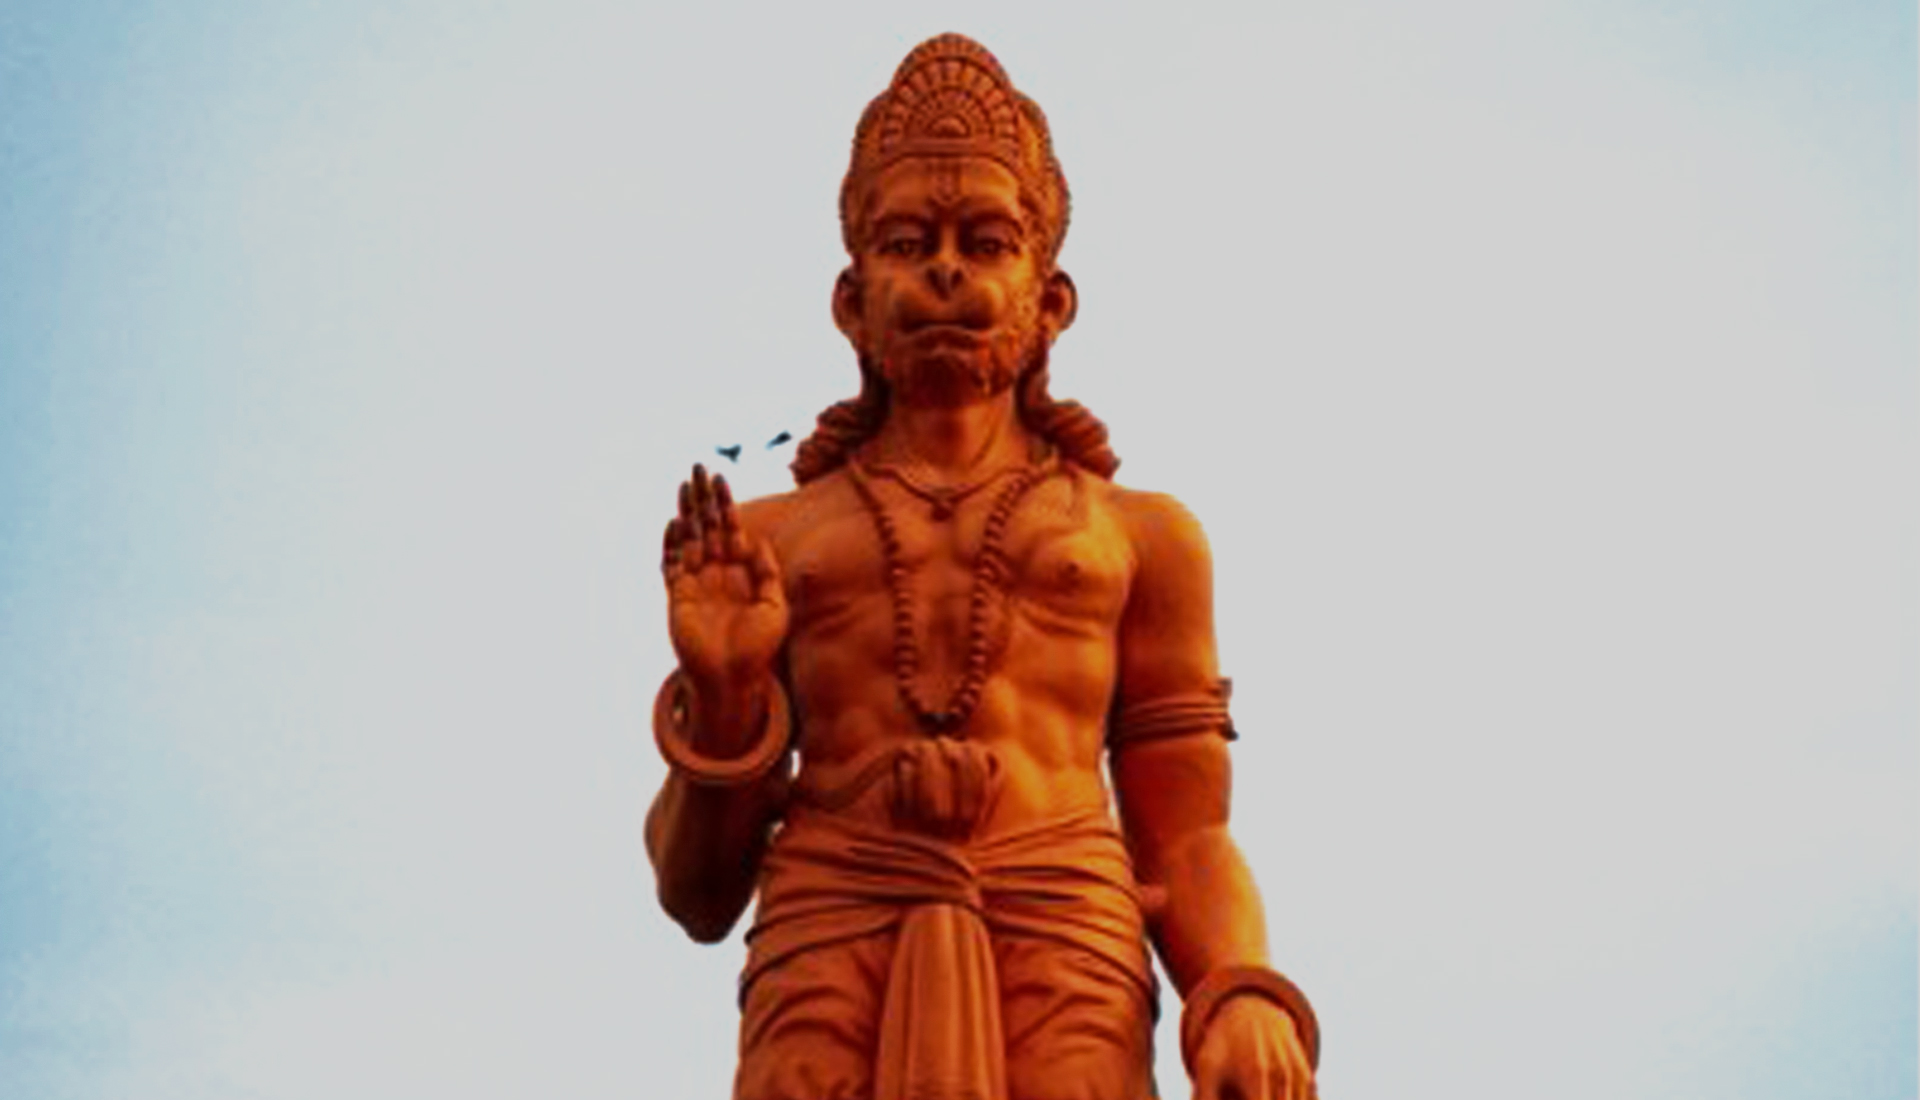 hanumans tallest statue